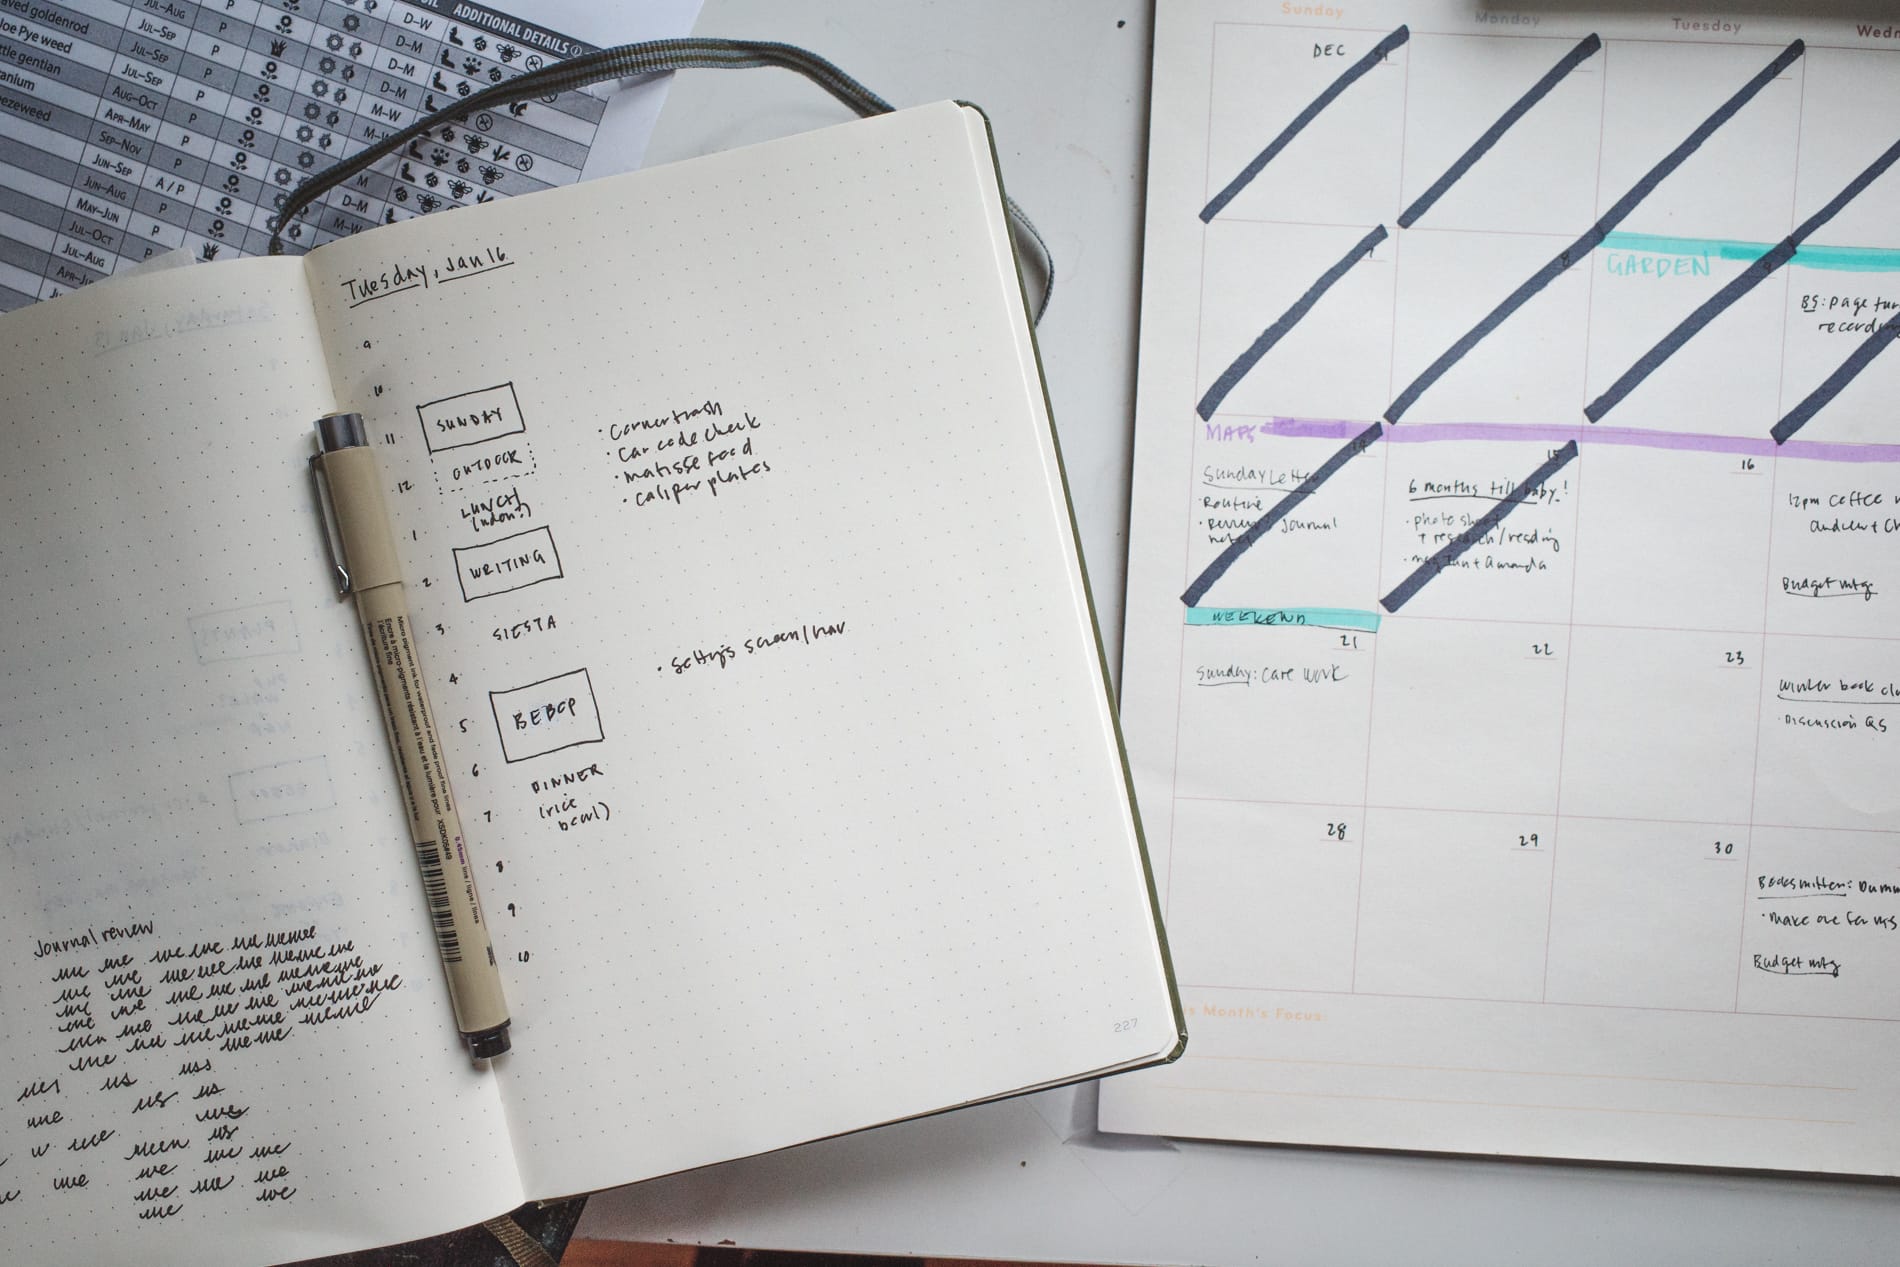 Journal open on desktop, pen in gutter, monthly planner pad underneath.